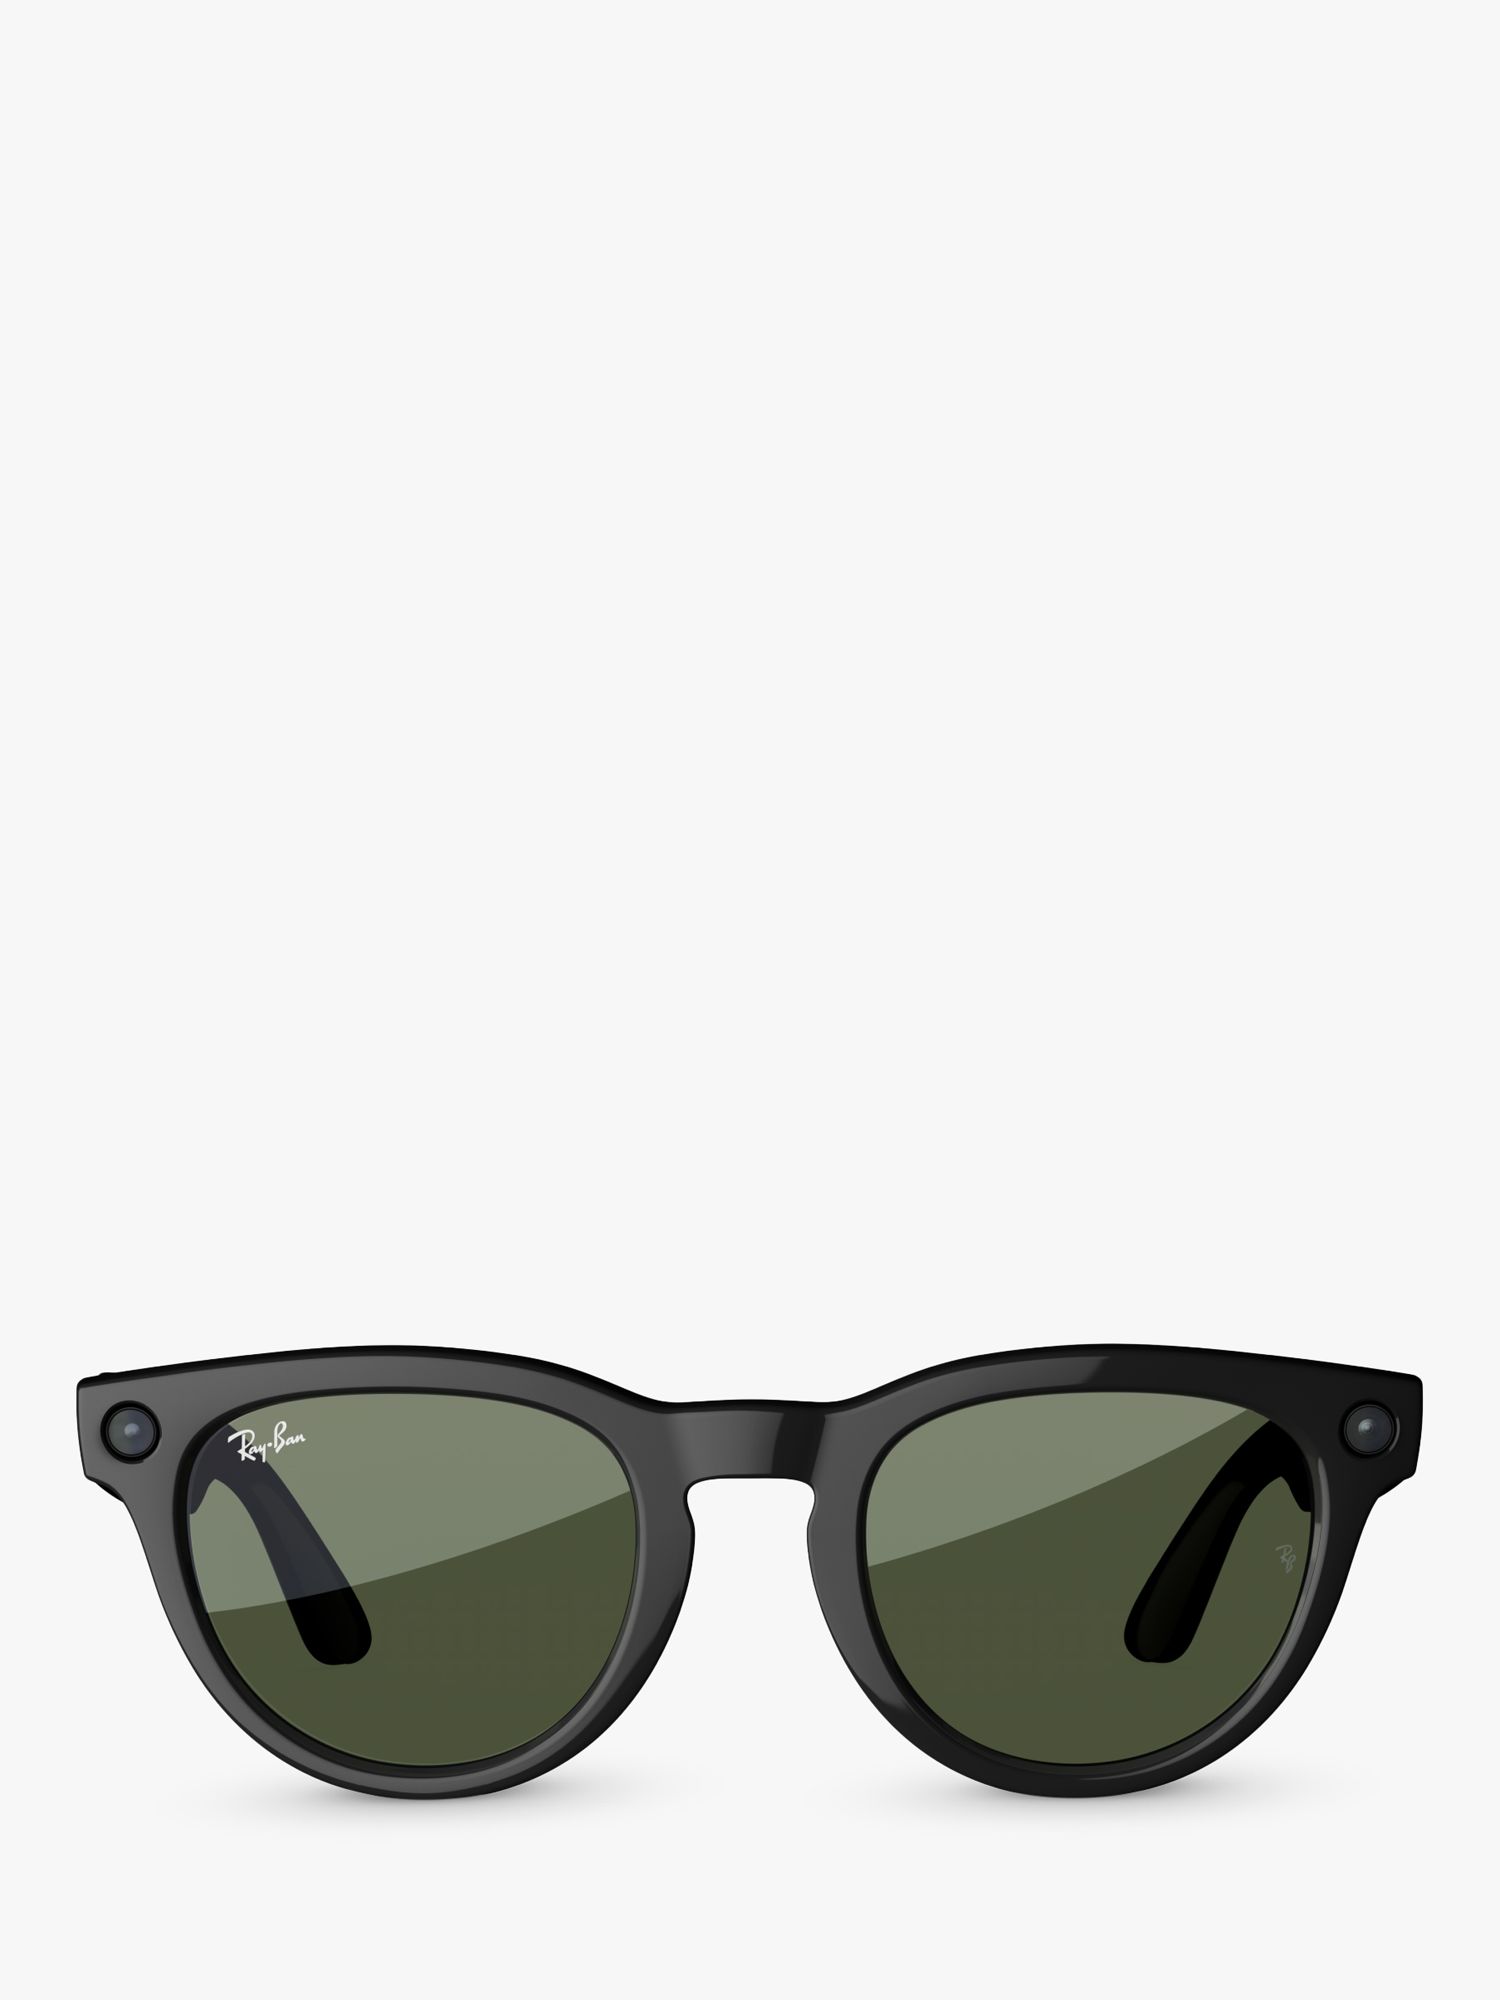 Ray-Ban Meta Headliner (Standard) Smart Glasses, Shiny Black, G15 Green Lens